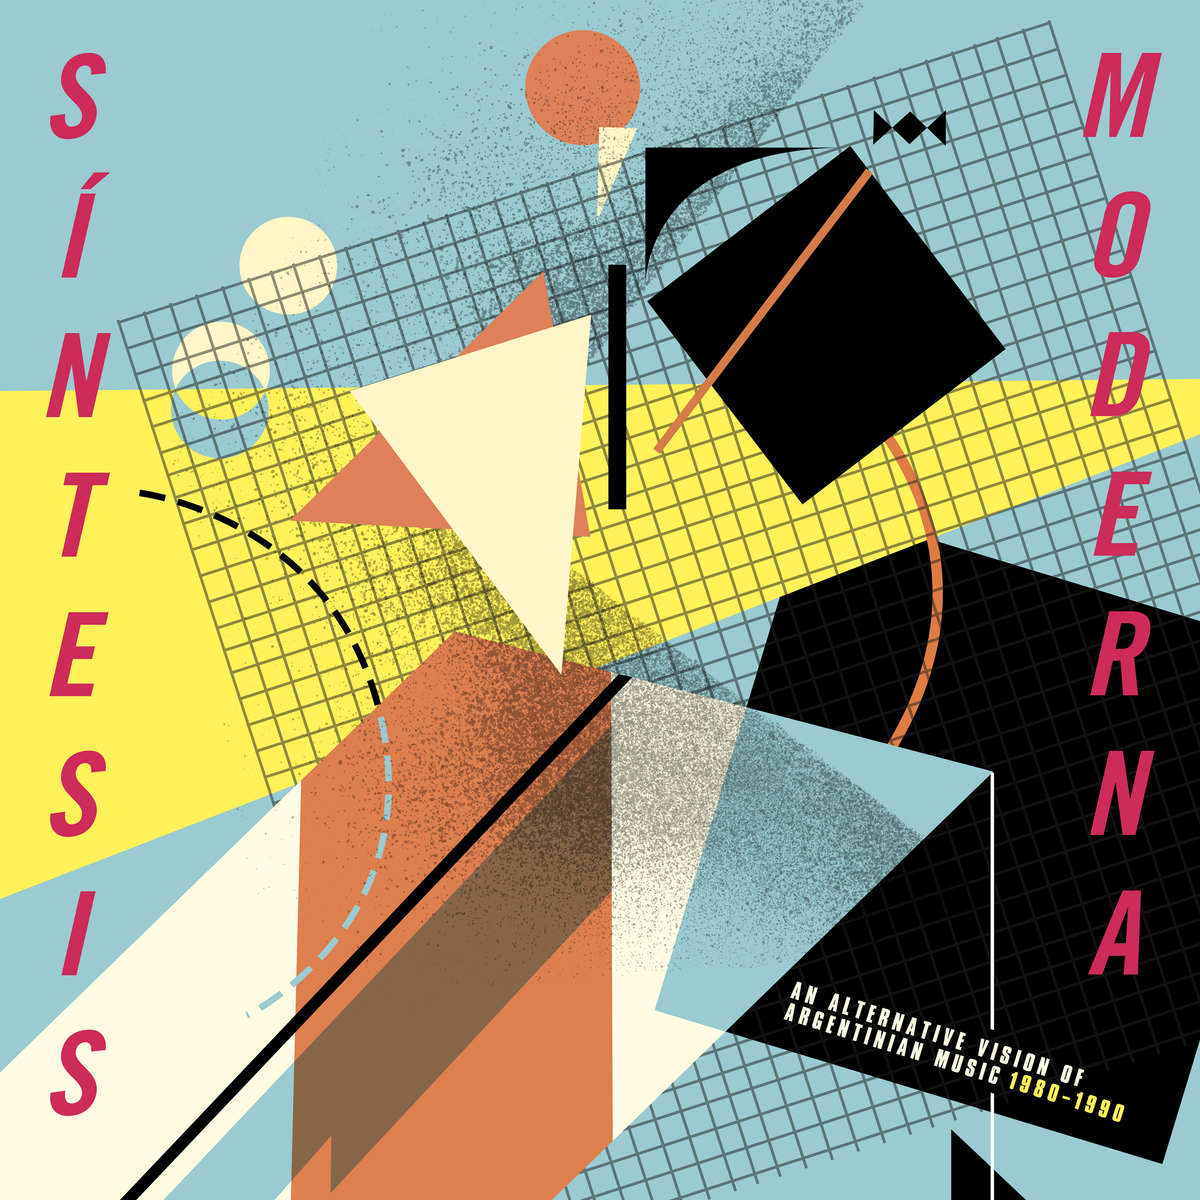 Sintesis Moderna: An Alternative Vision Of Argentinean Music (1980-1990)